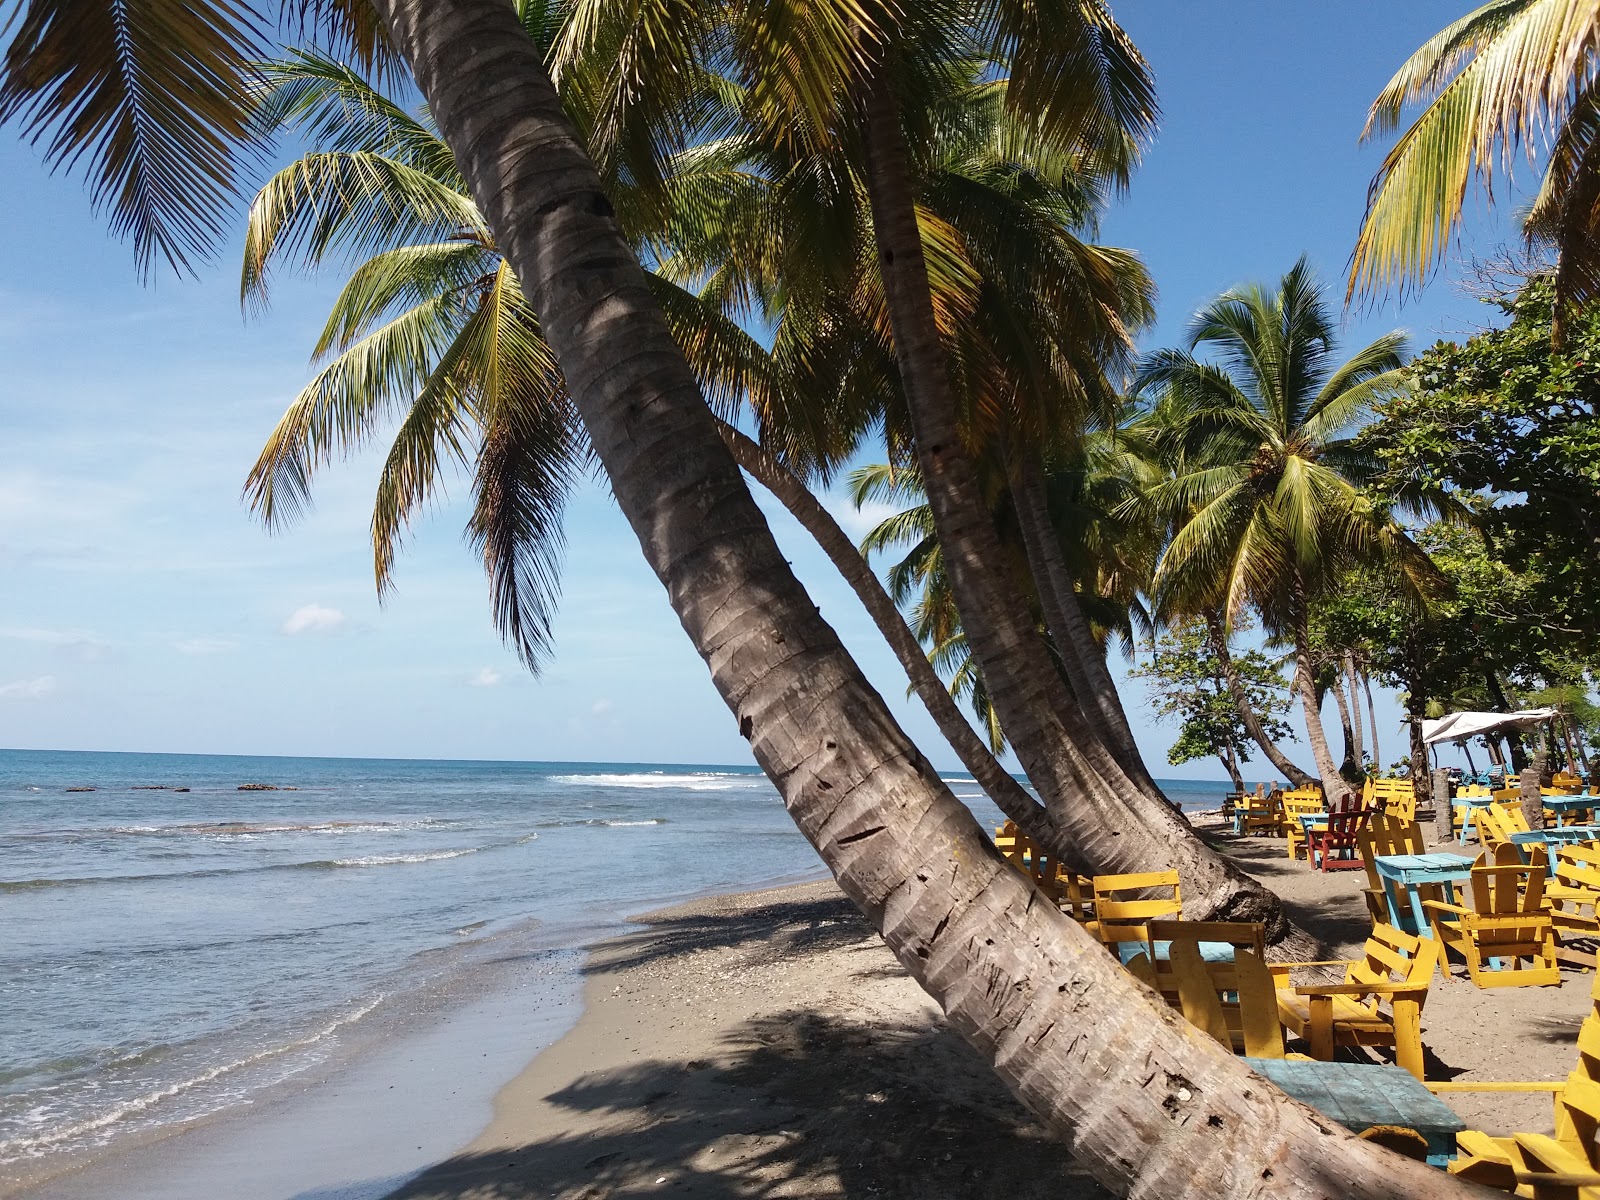 Palenque beach'in fotoğrafı geniş plaj ile birlikte